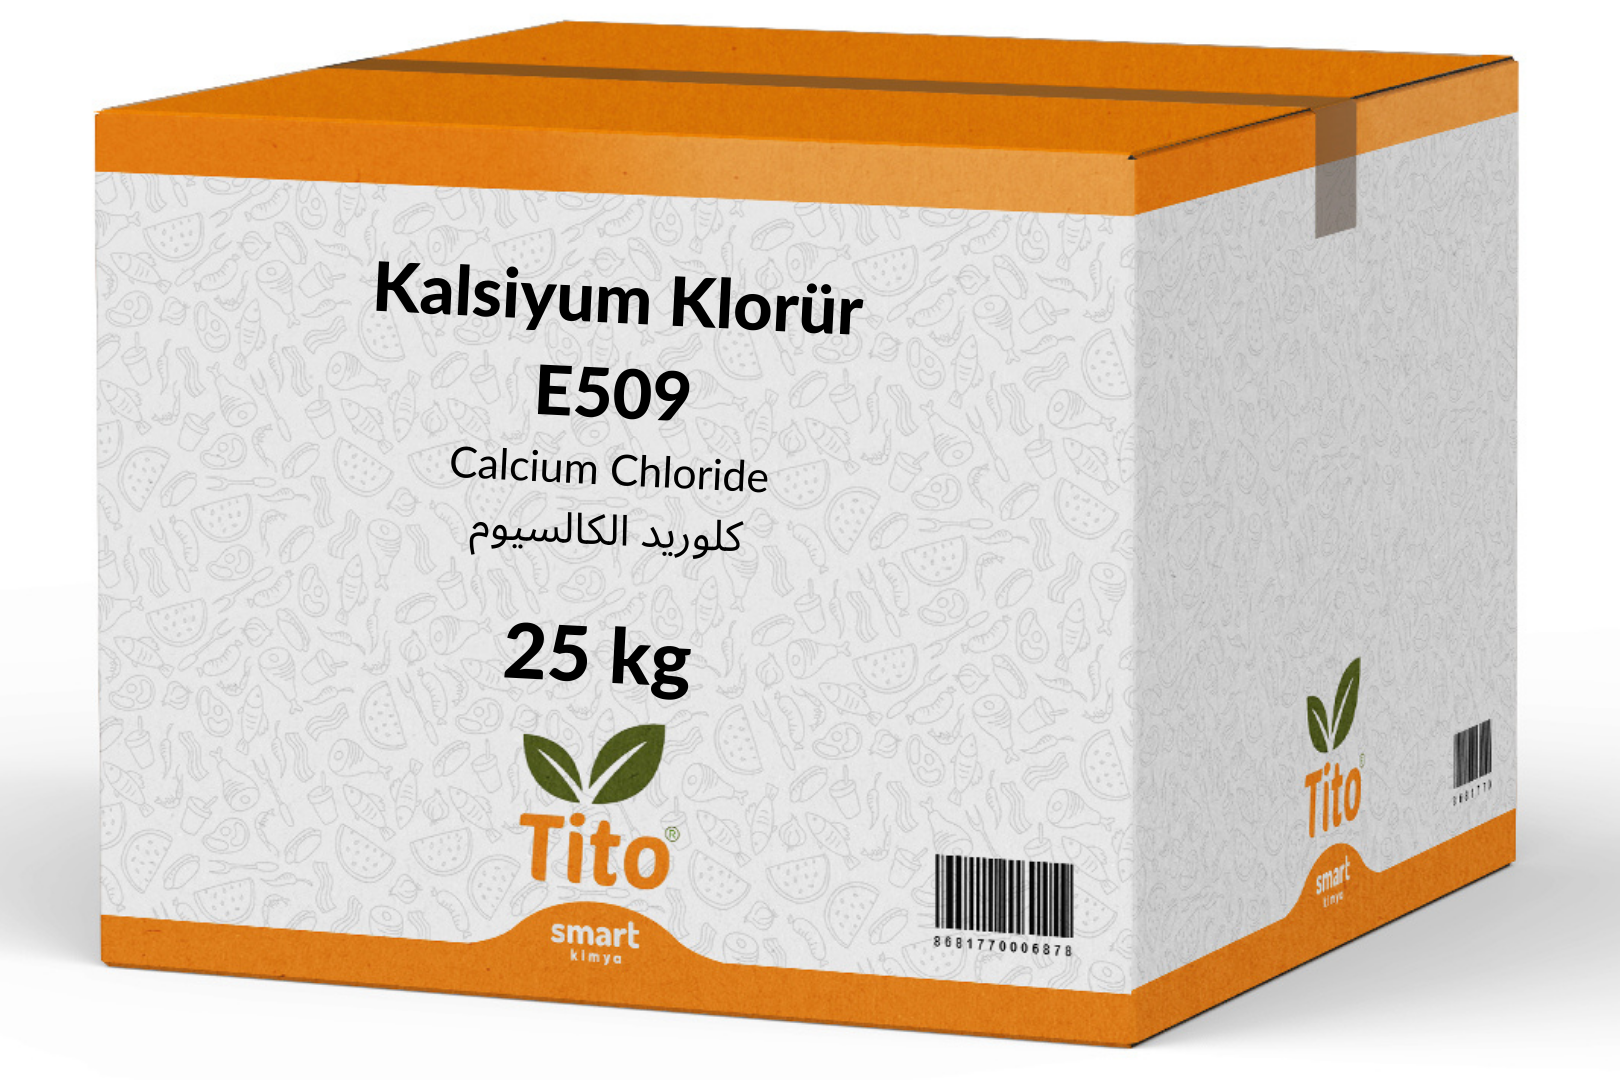 Kalsiyum Klorür E509 25 kg